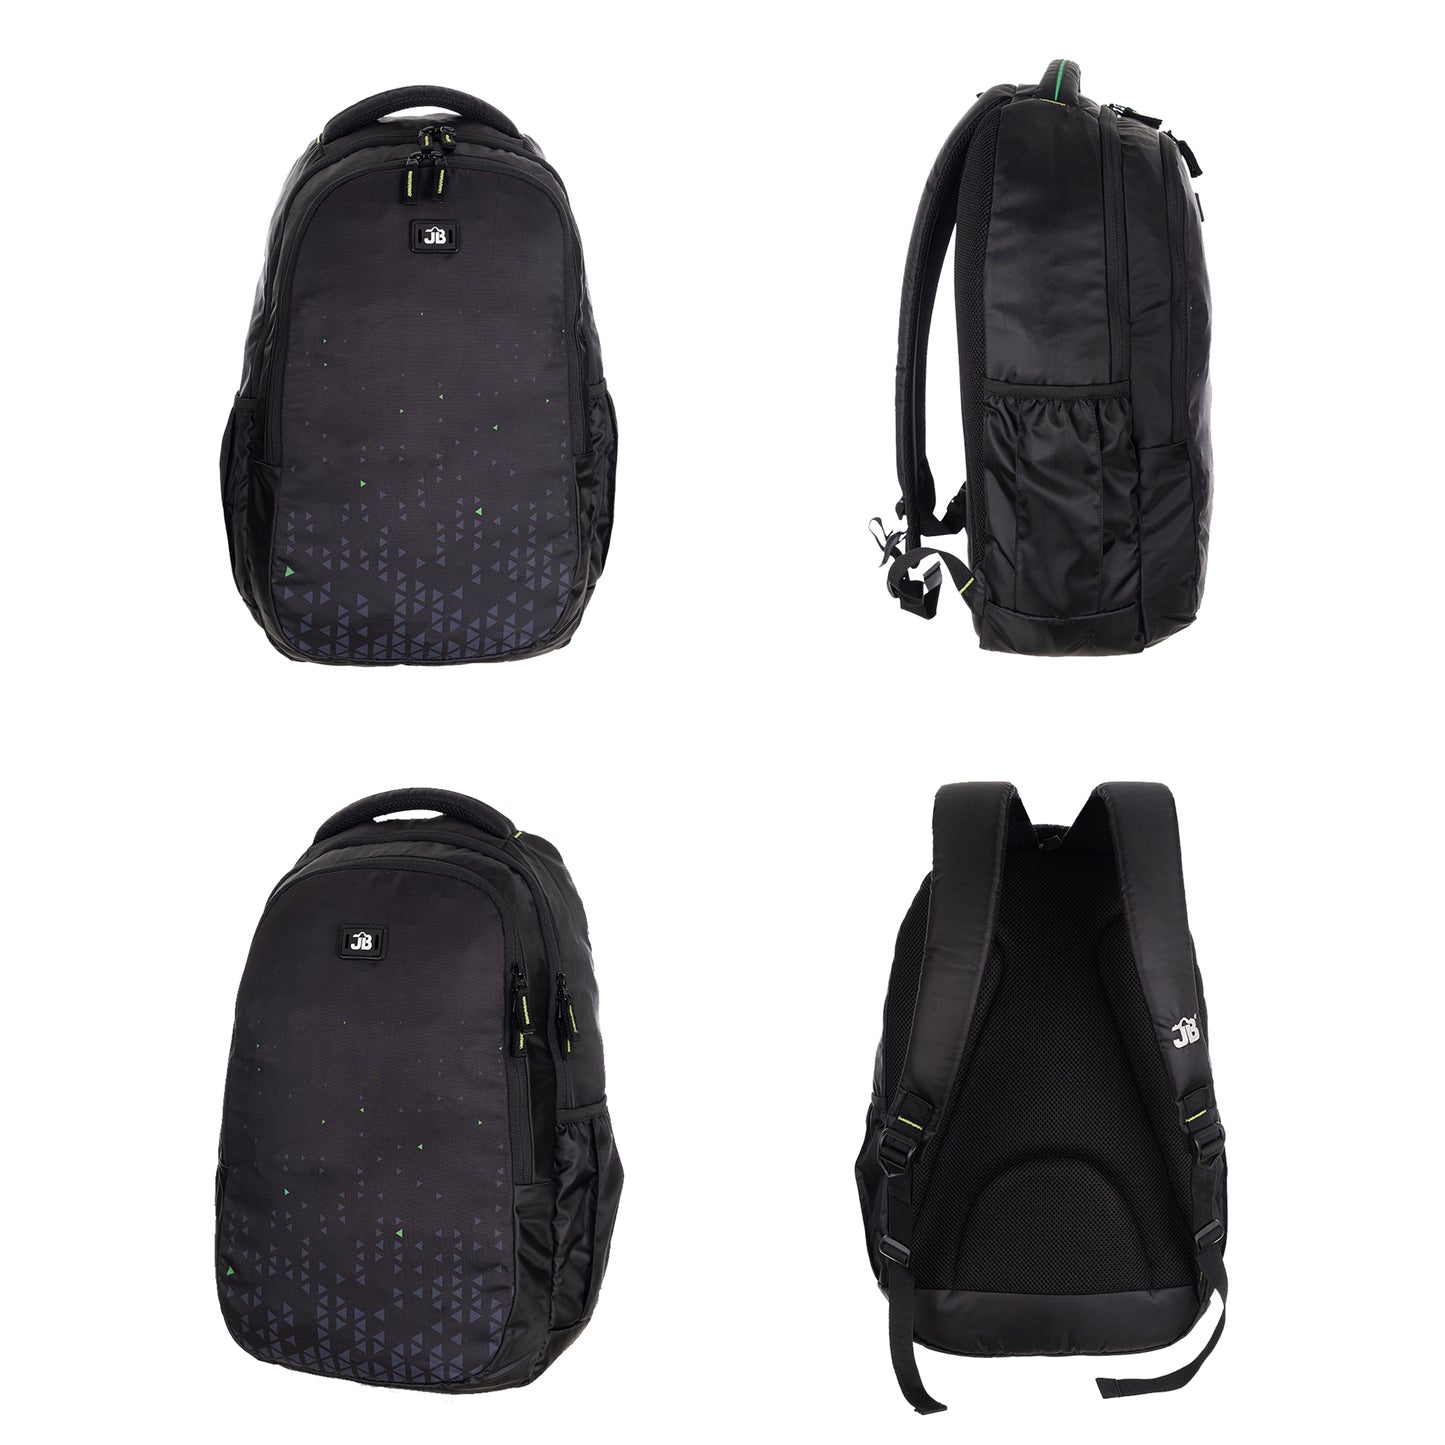 Horizon Unisex Sleek Laptop Backpack (Black)